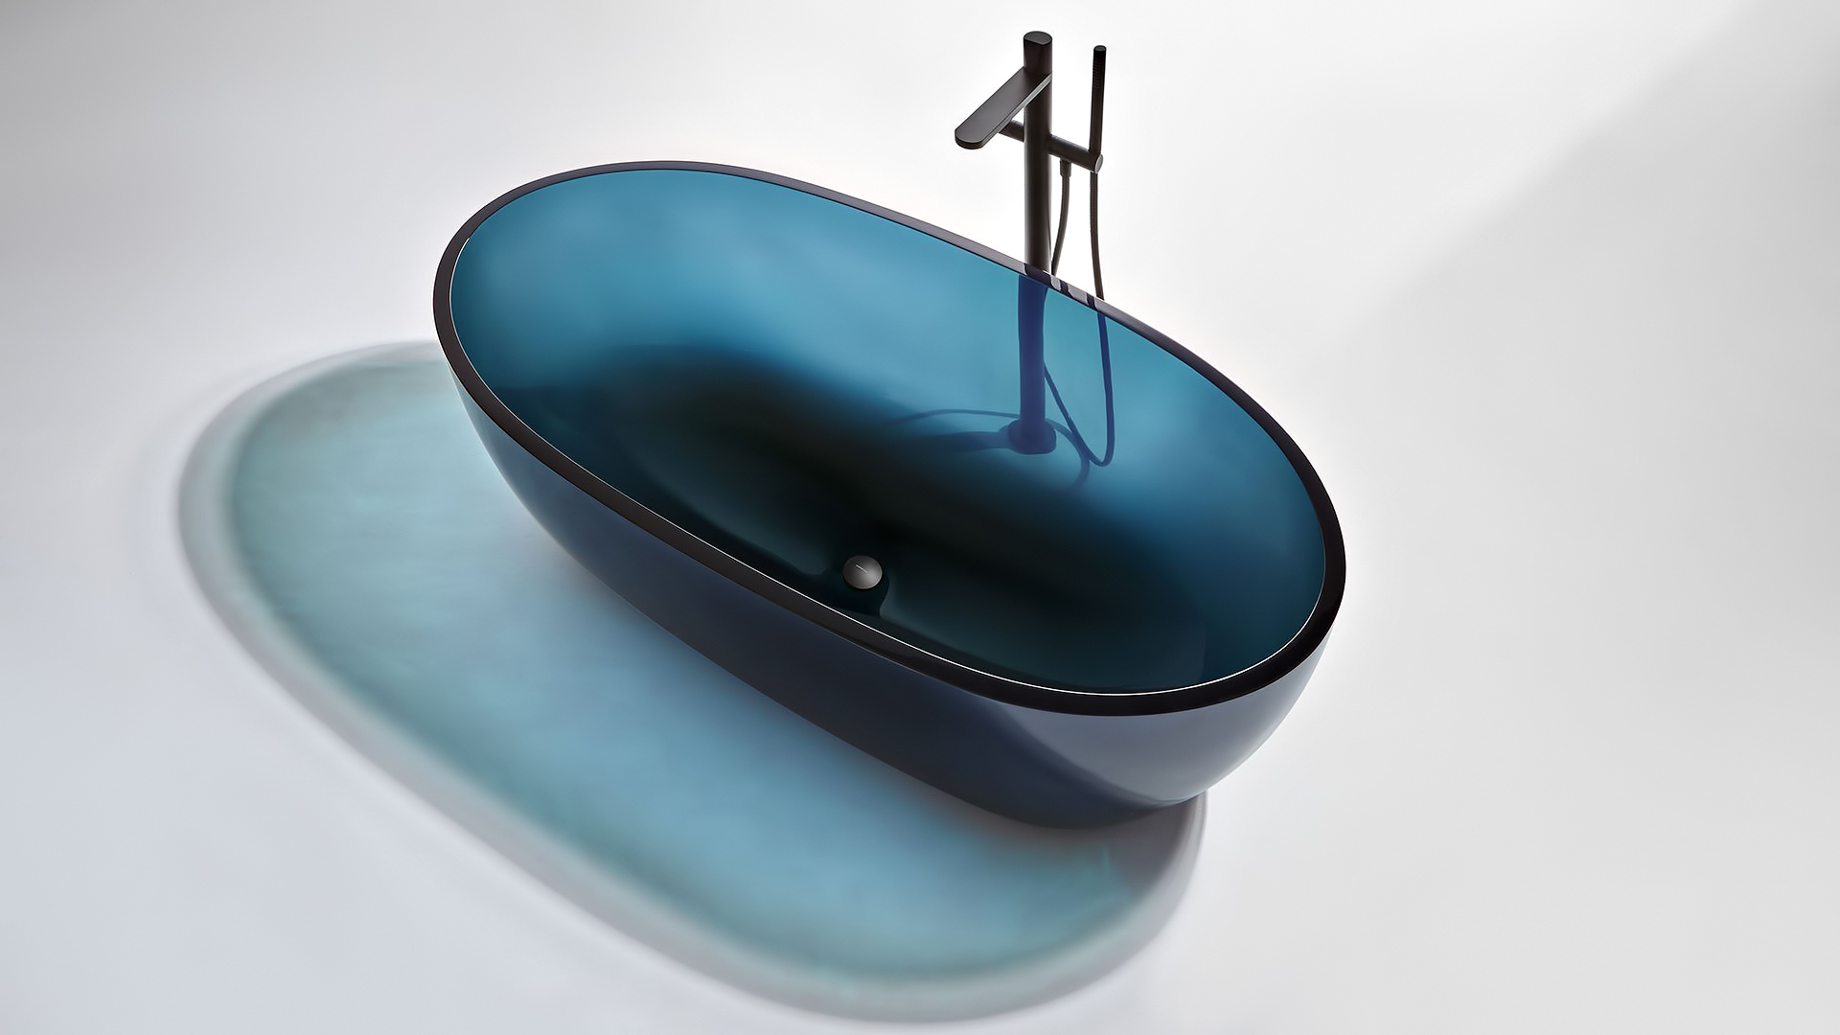 Transparent REFLEX Cristalmood Resin Luxury Bathtub by AL Studio – Ceruleo